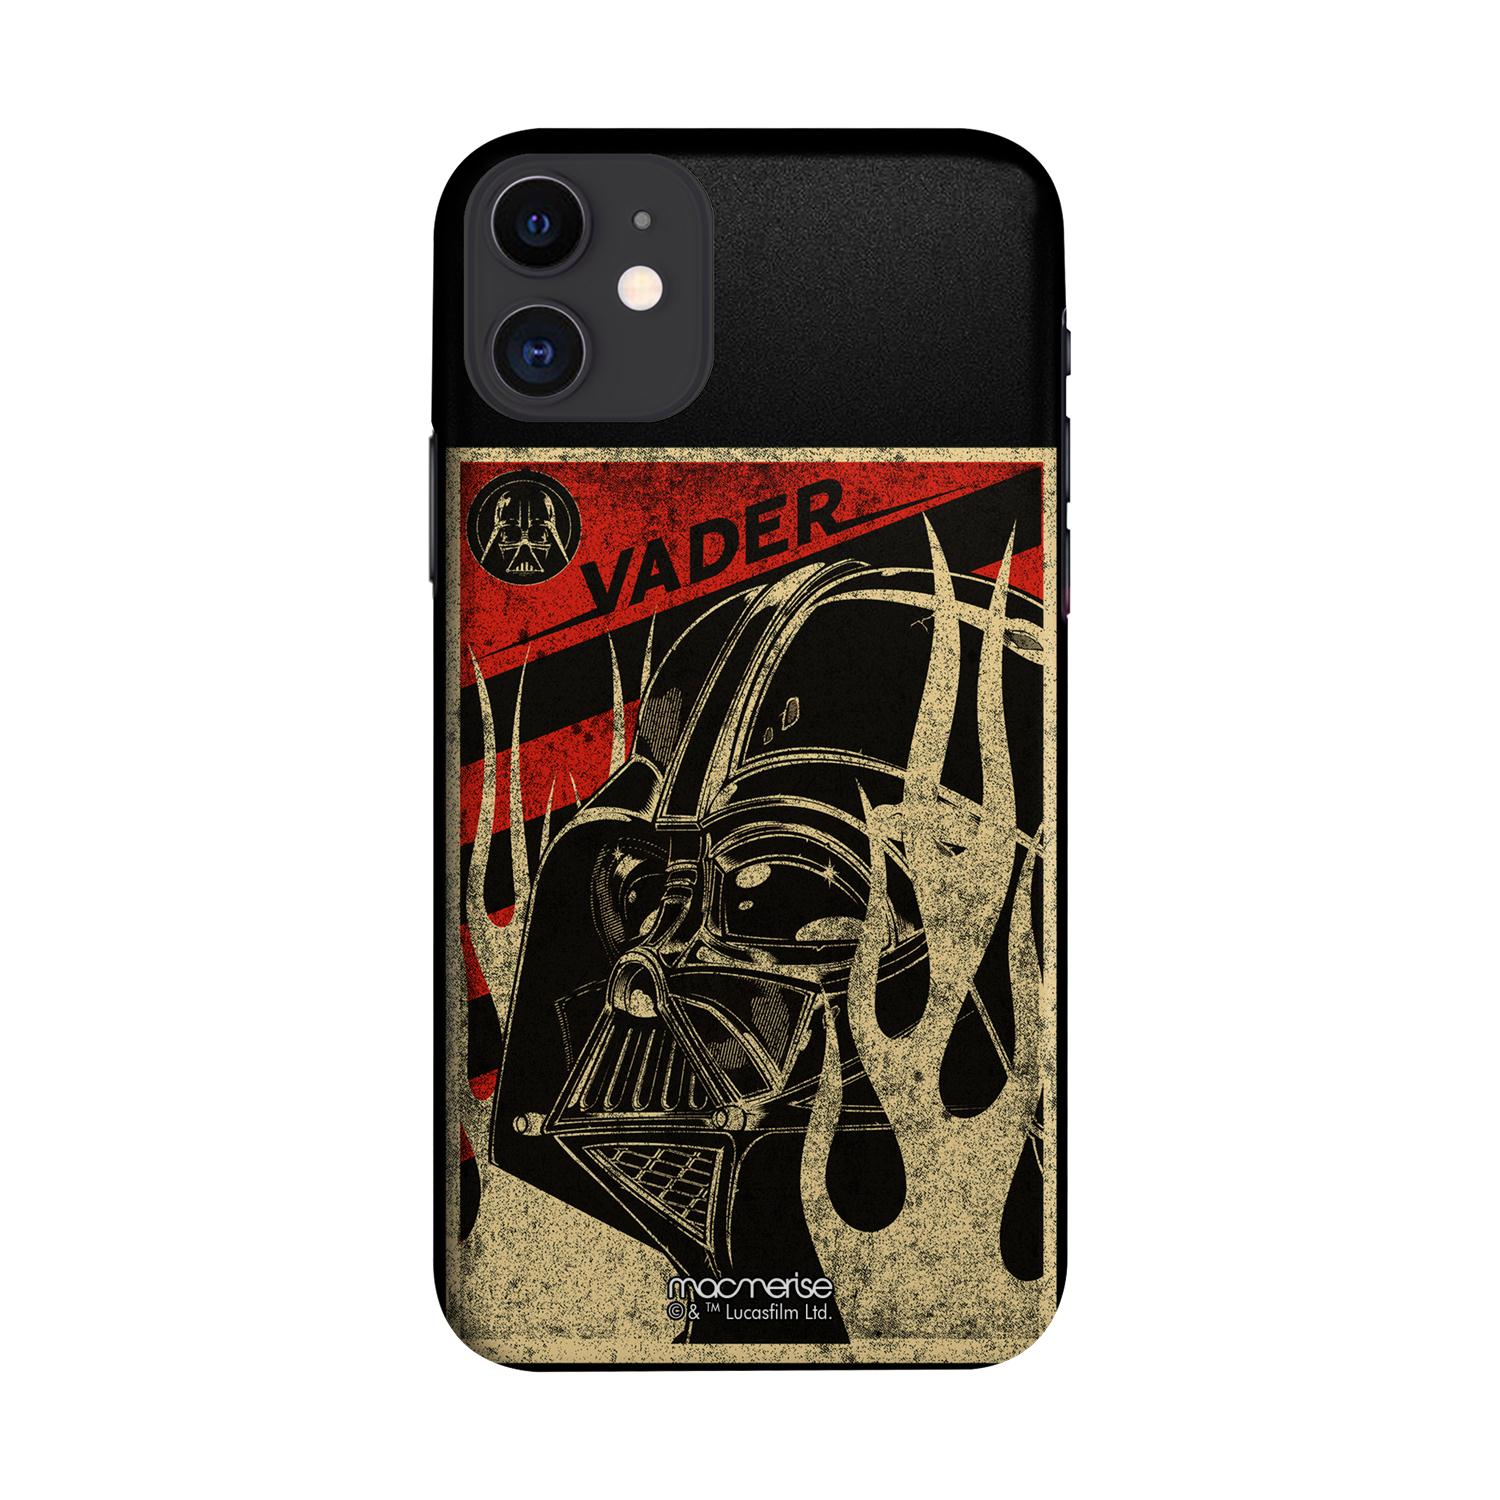 Buy Vader Stamp - Sleek Phone Case for iPhone 11 Online